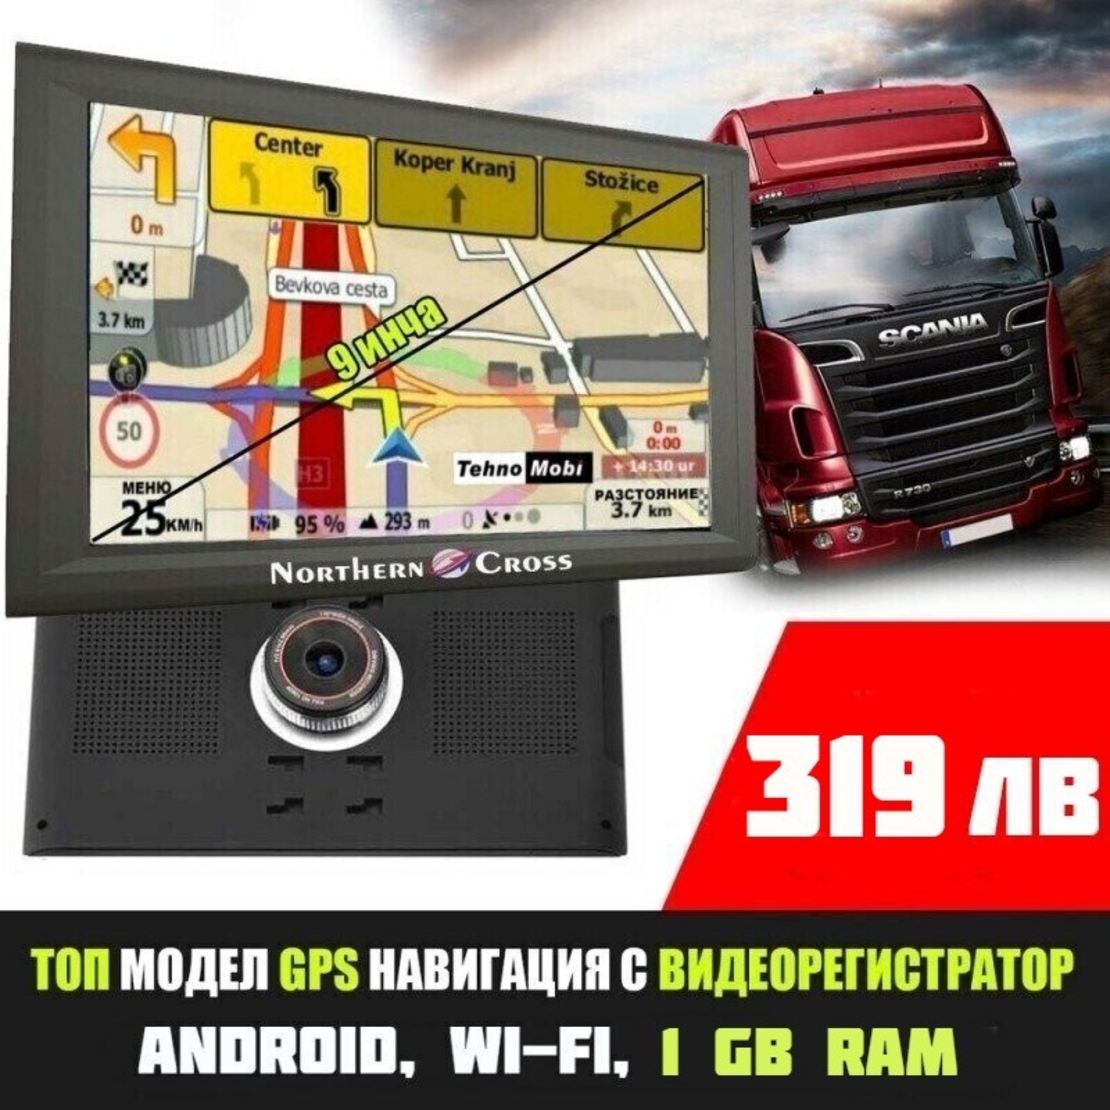 GPS Навигация Northern Cross NC-Q99A DVR, 9 инча, Android, Wi-Fi, Видеорегистратор, 2 Програми